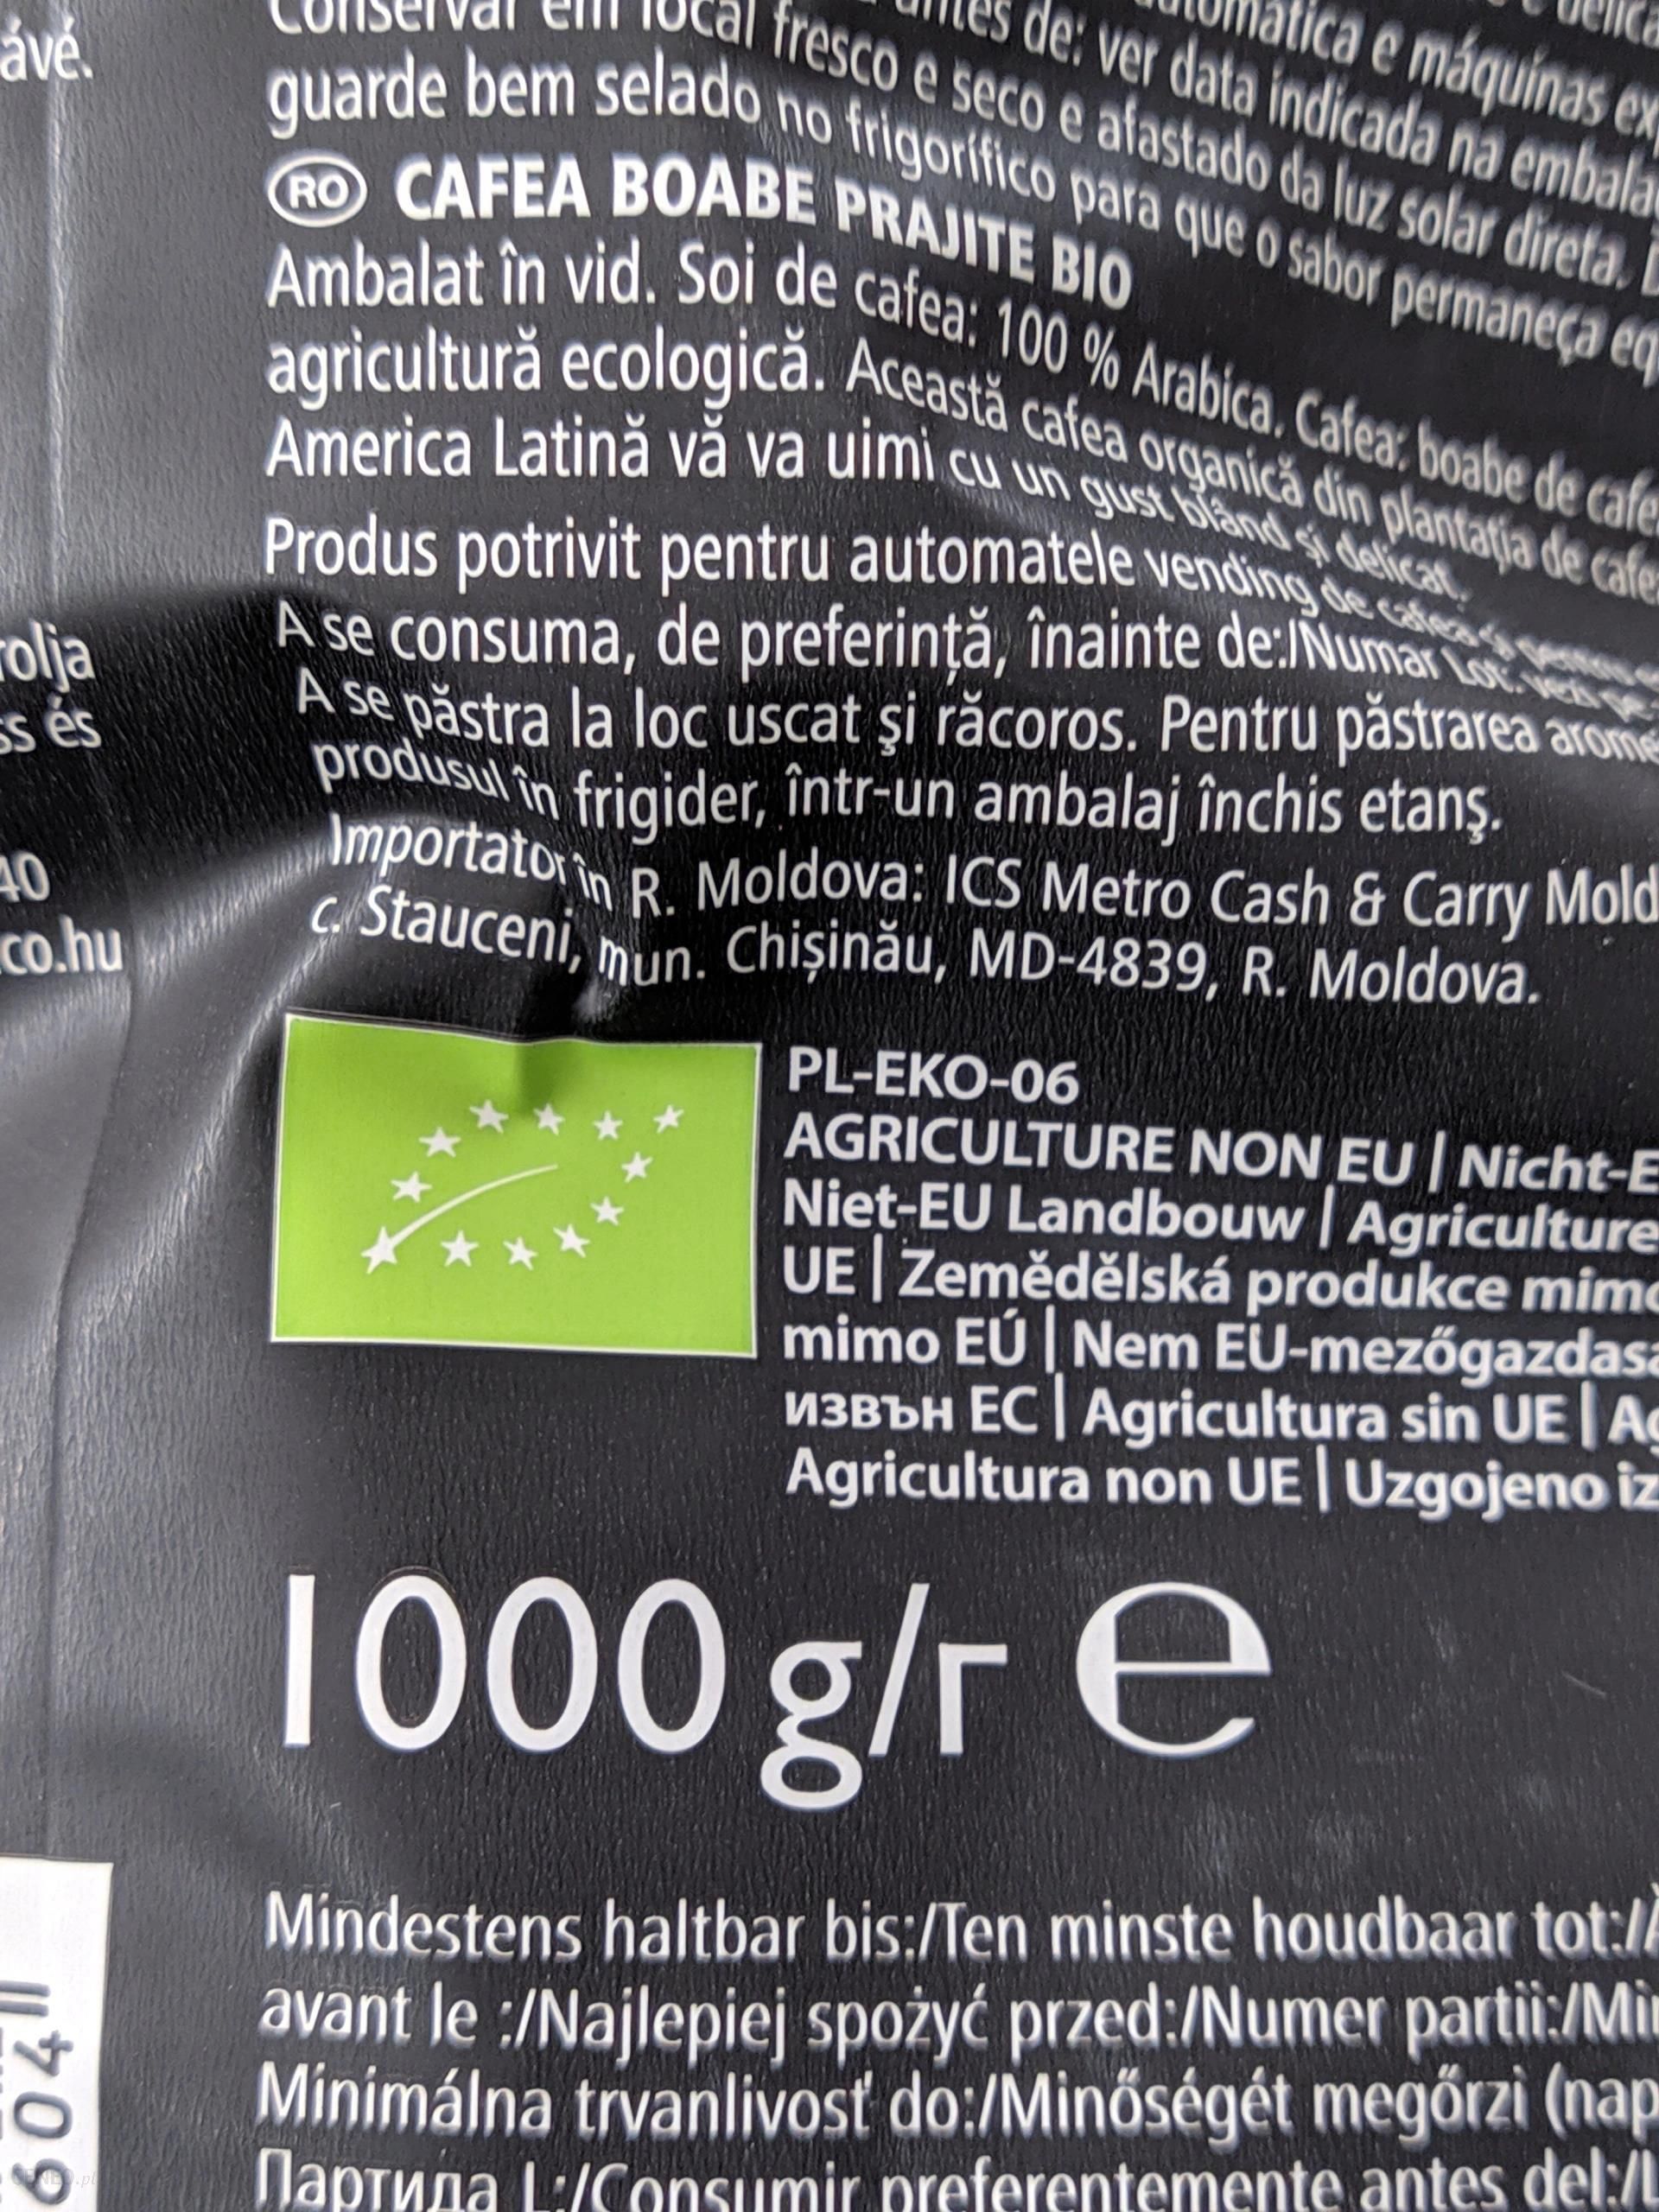 Café en grain 100% Arabica 1kg Gilbert BIO